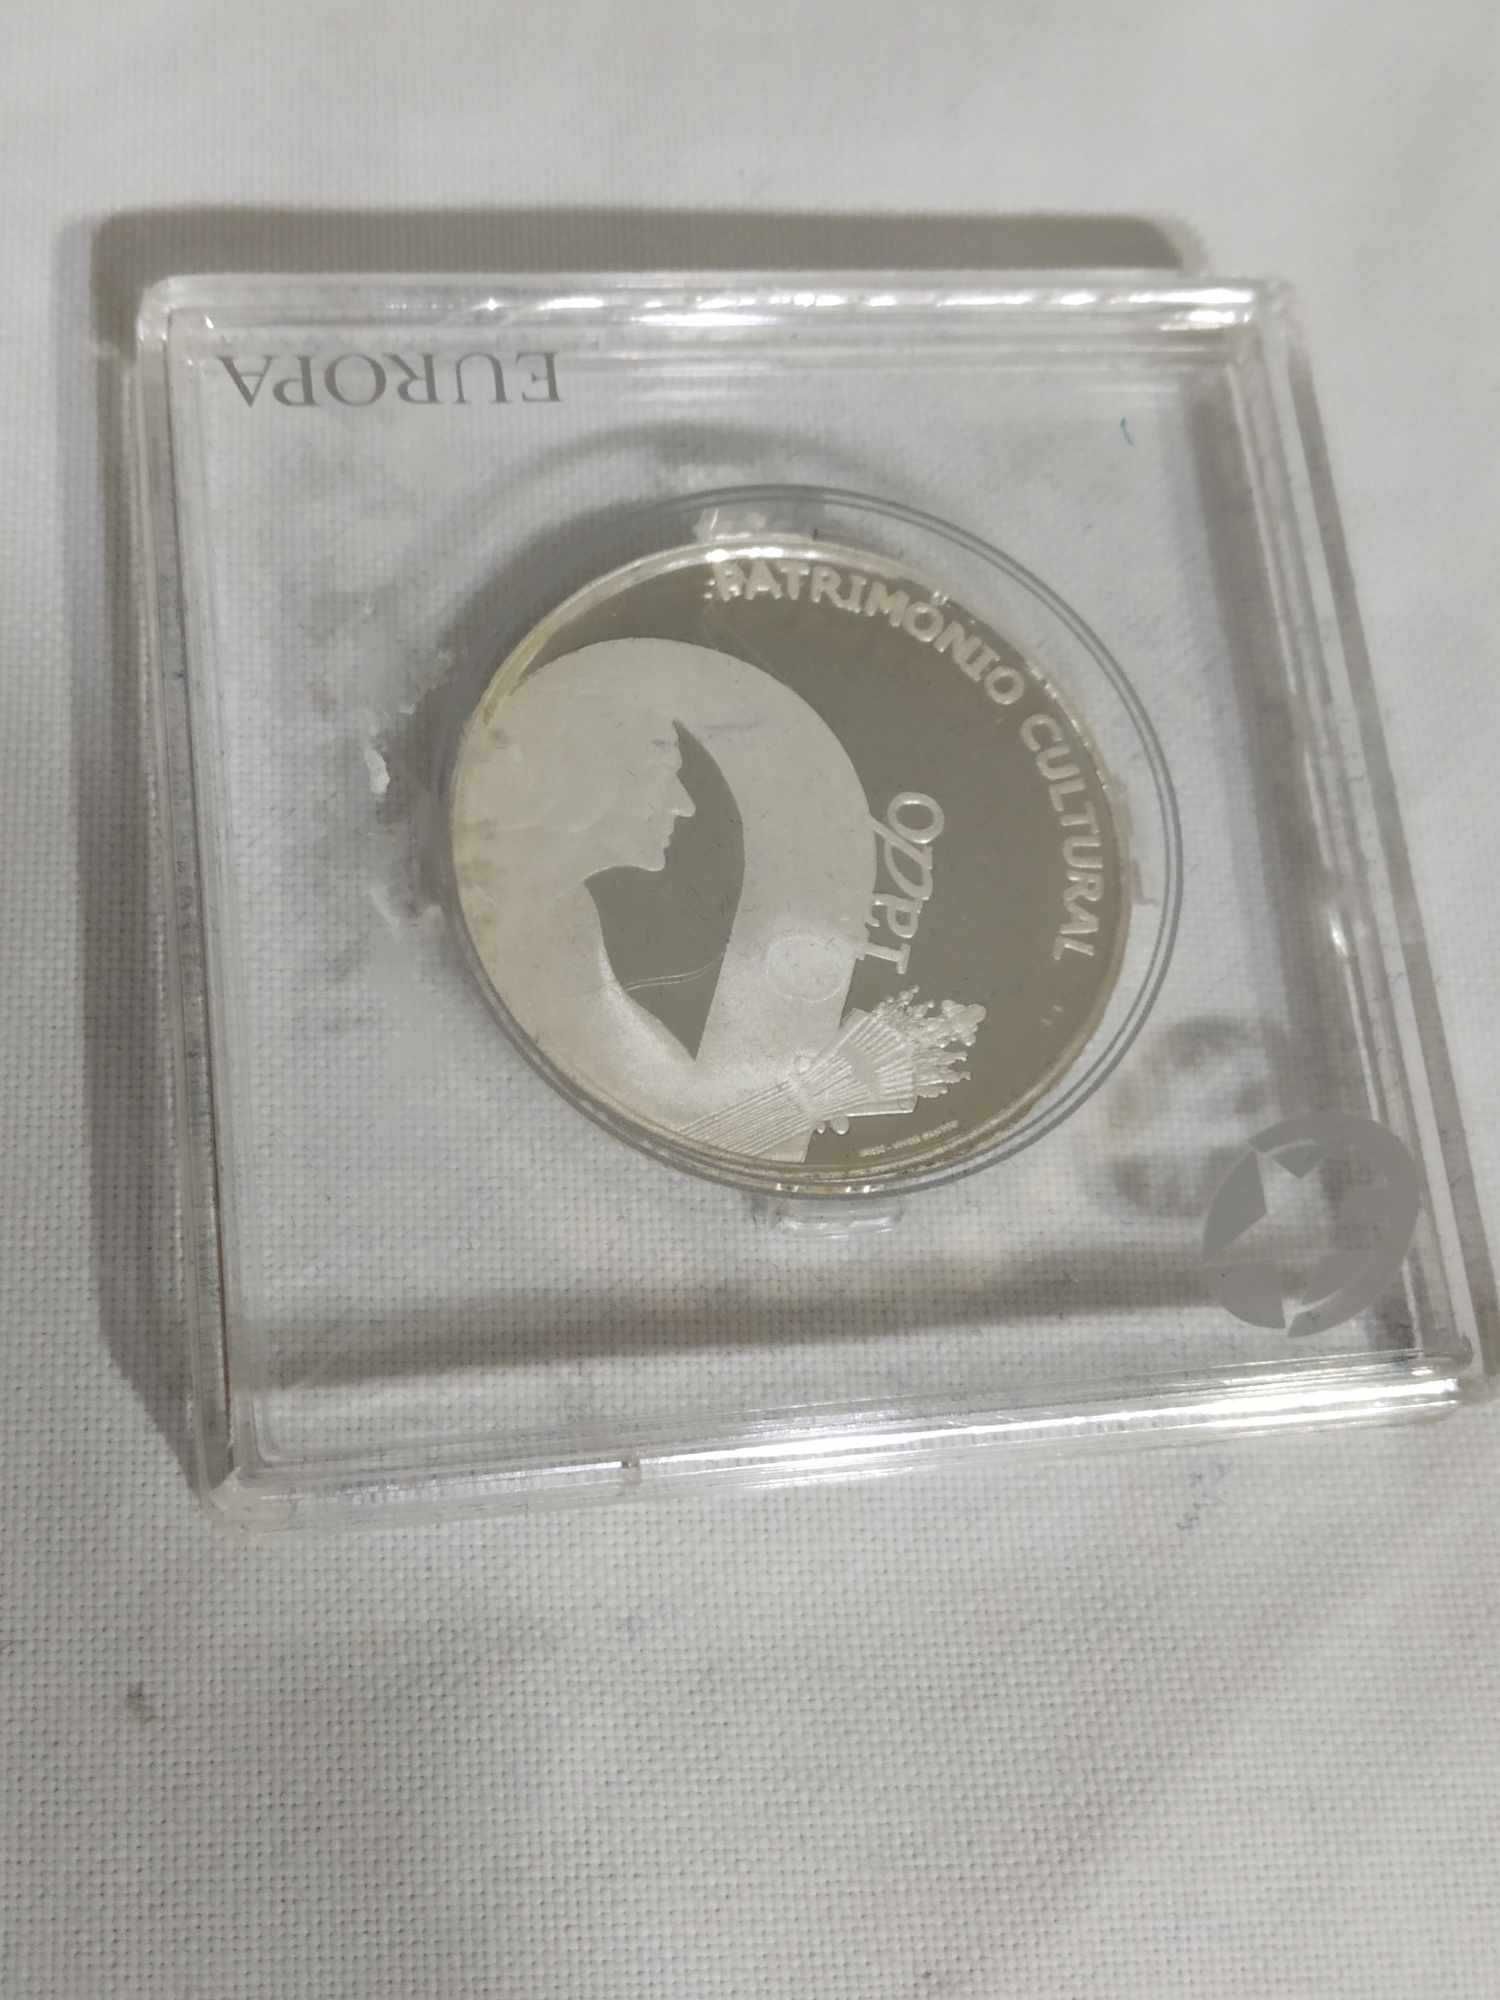 Europa Coin Program moeda fado prata proof